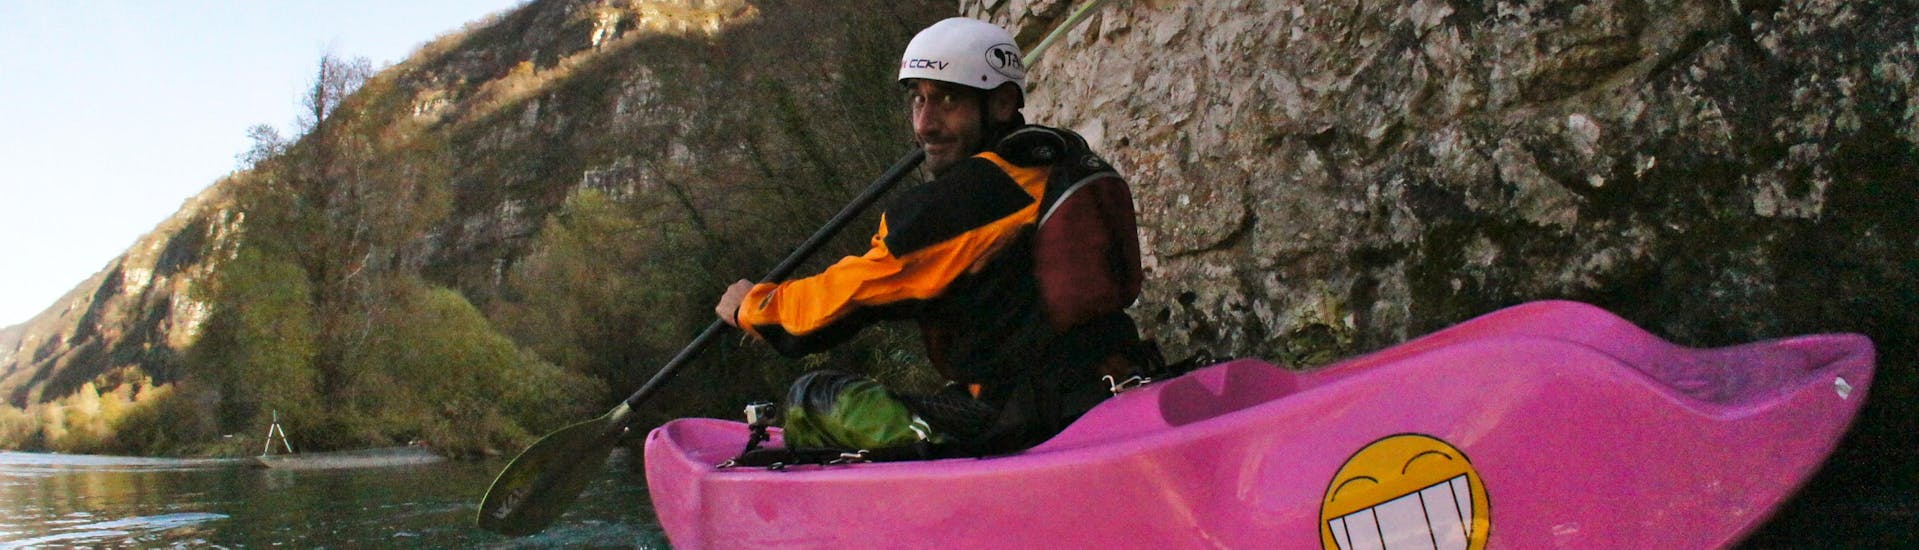 Kayak "Into the Wild" sull'Adda.